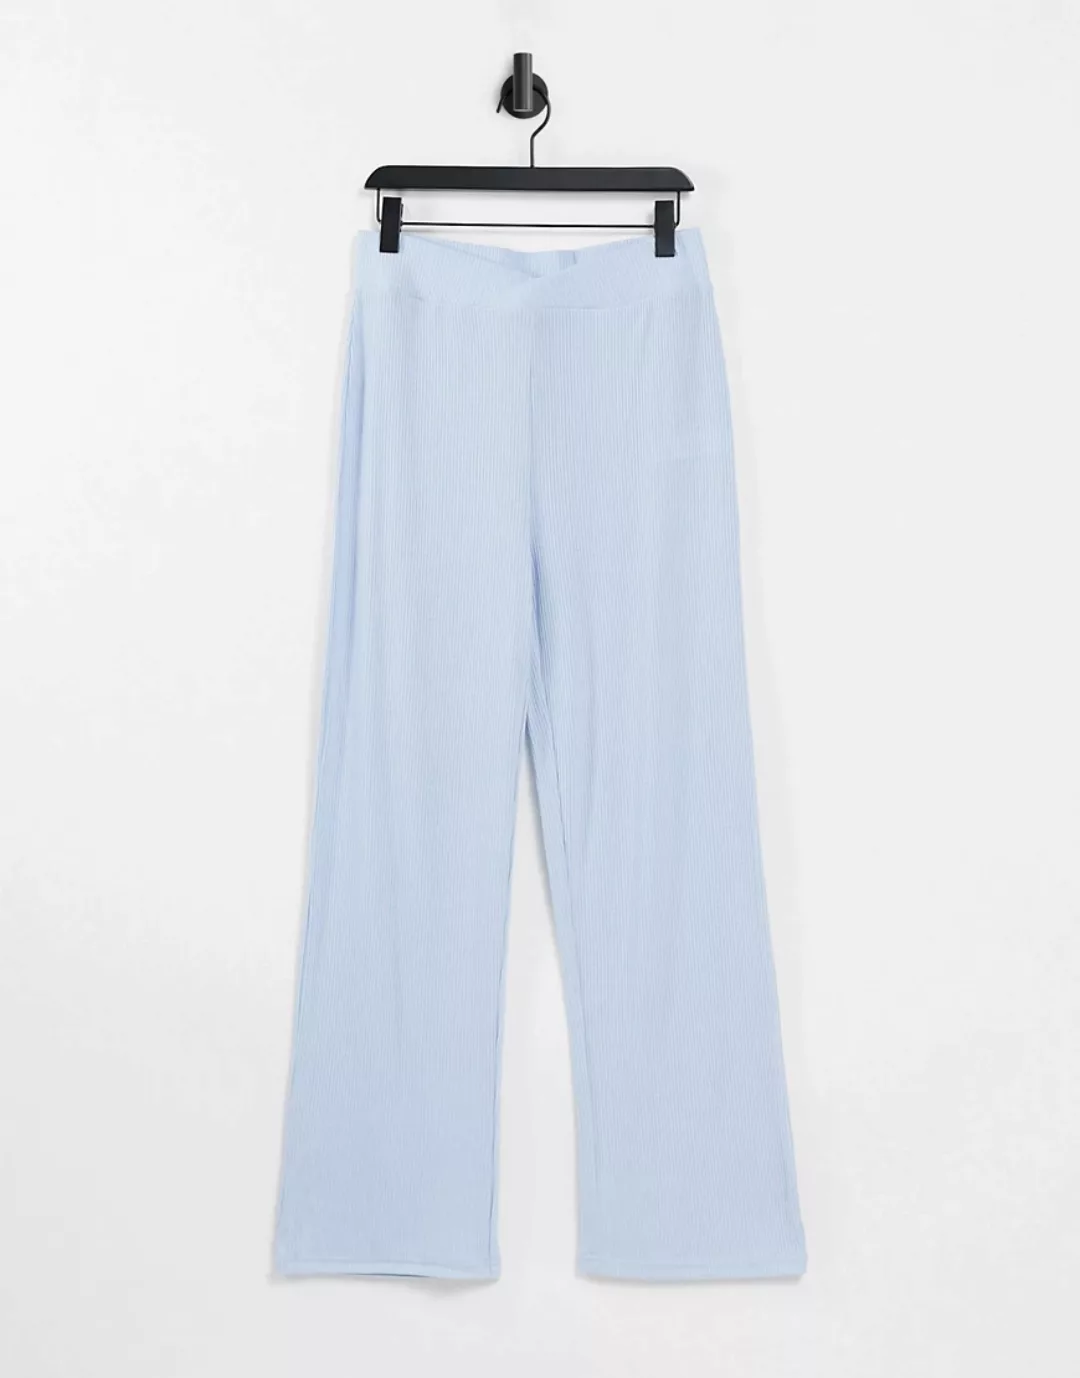 New Look – Loungewear – Hose in Hellblau, Kombiteil günstig online kaufen